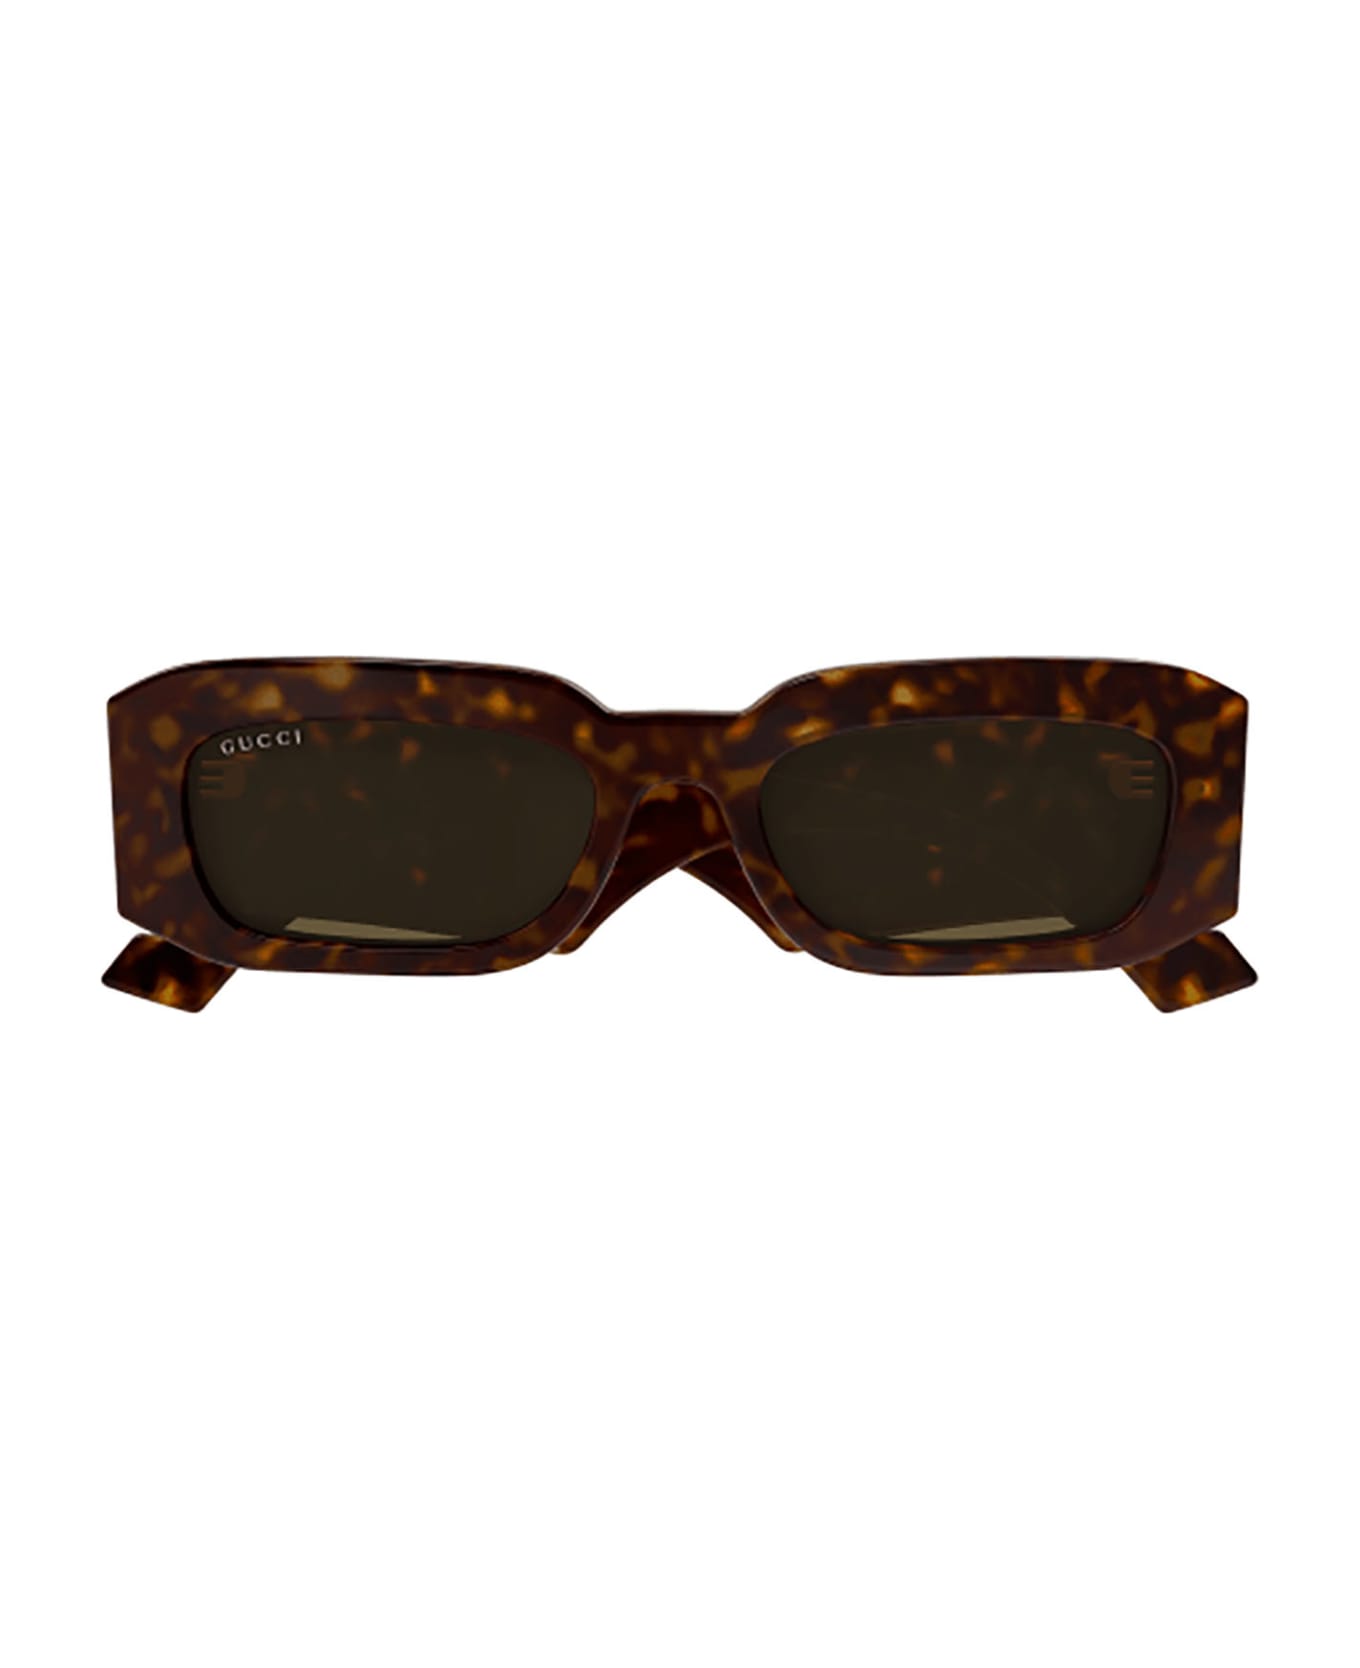 Gucci Eyewear GG1426S Sunglasses - Havana Havana Brown